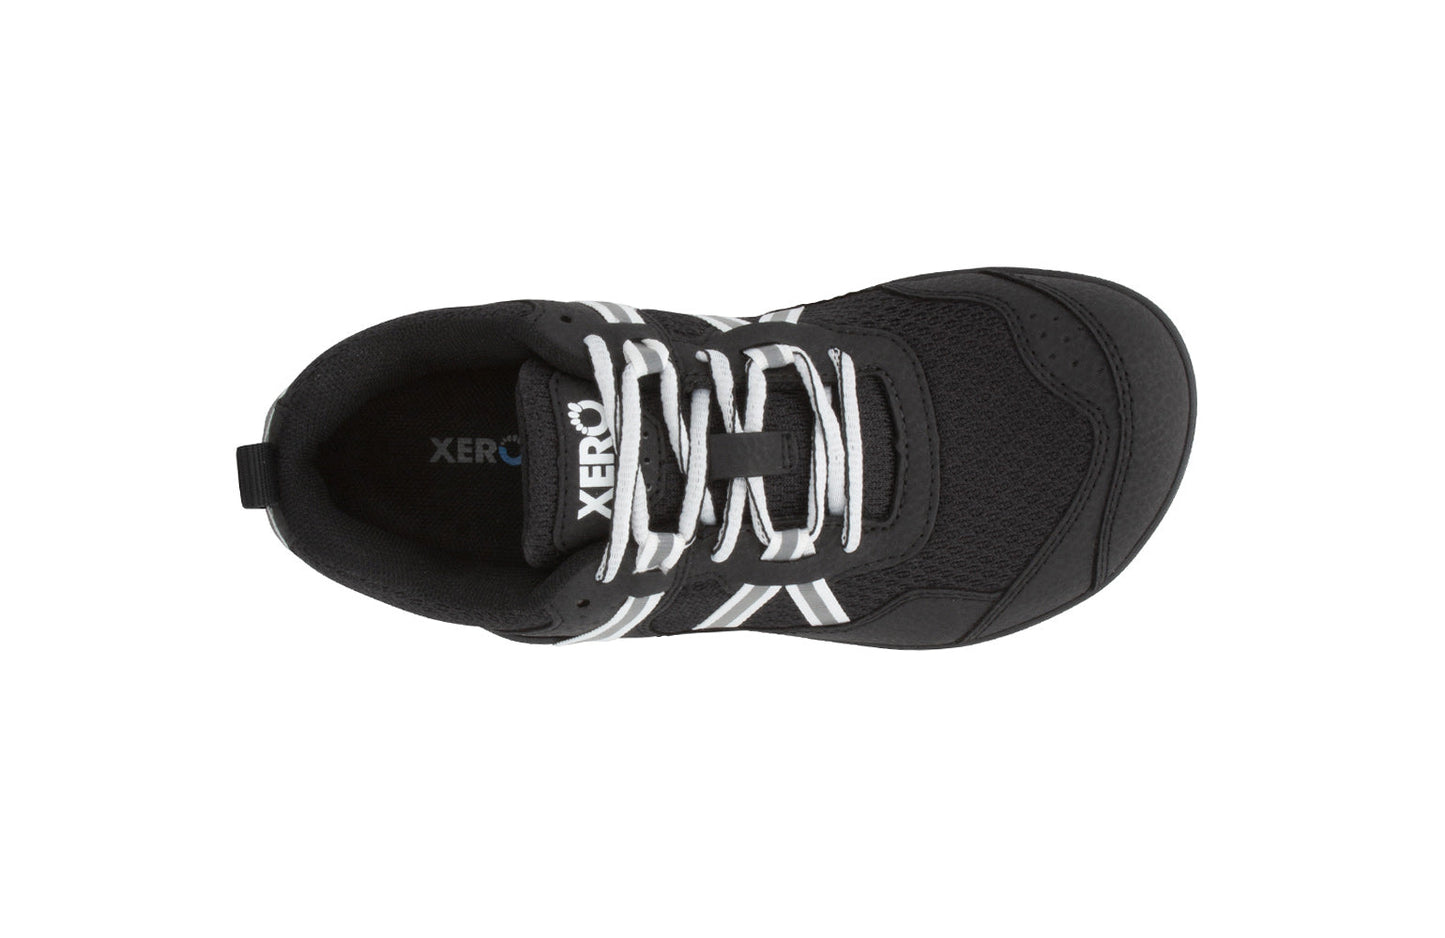 Xero Shoes Prio Kids barfods træningssko/sneakers til børn i farven black/white, top